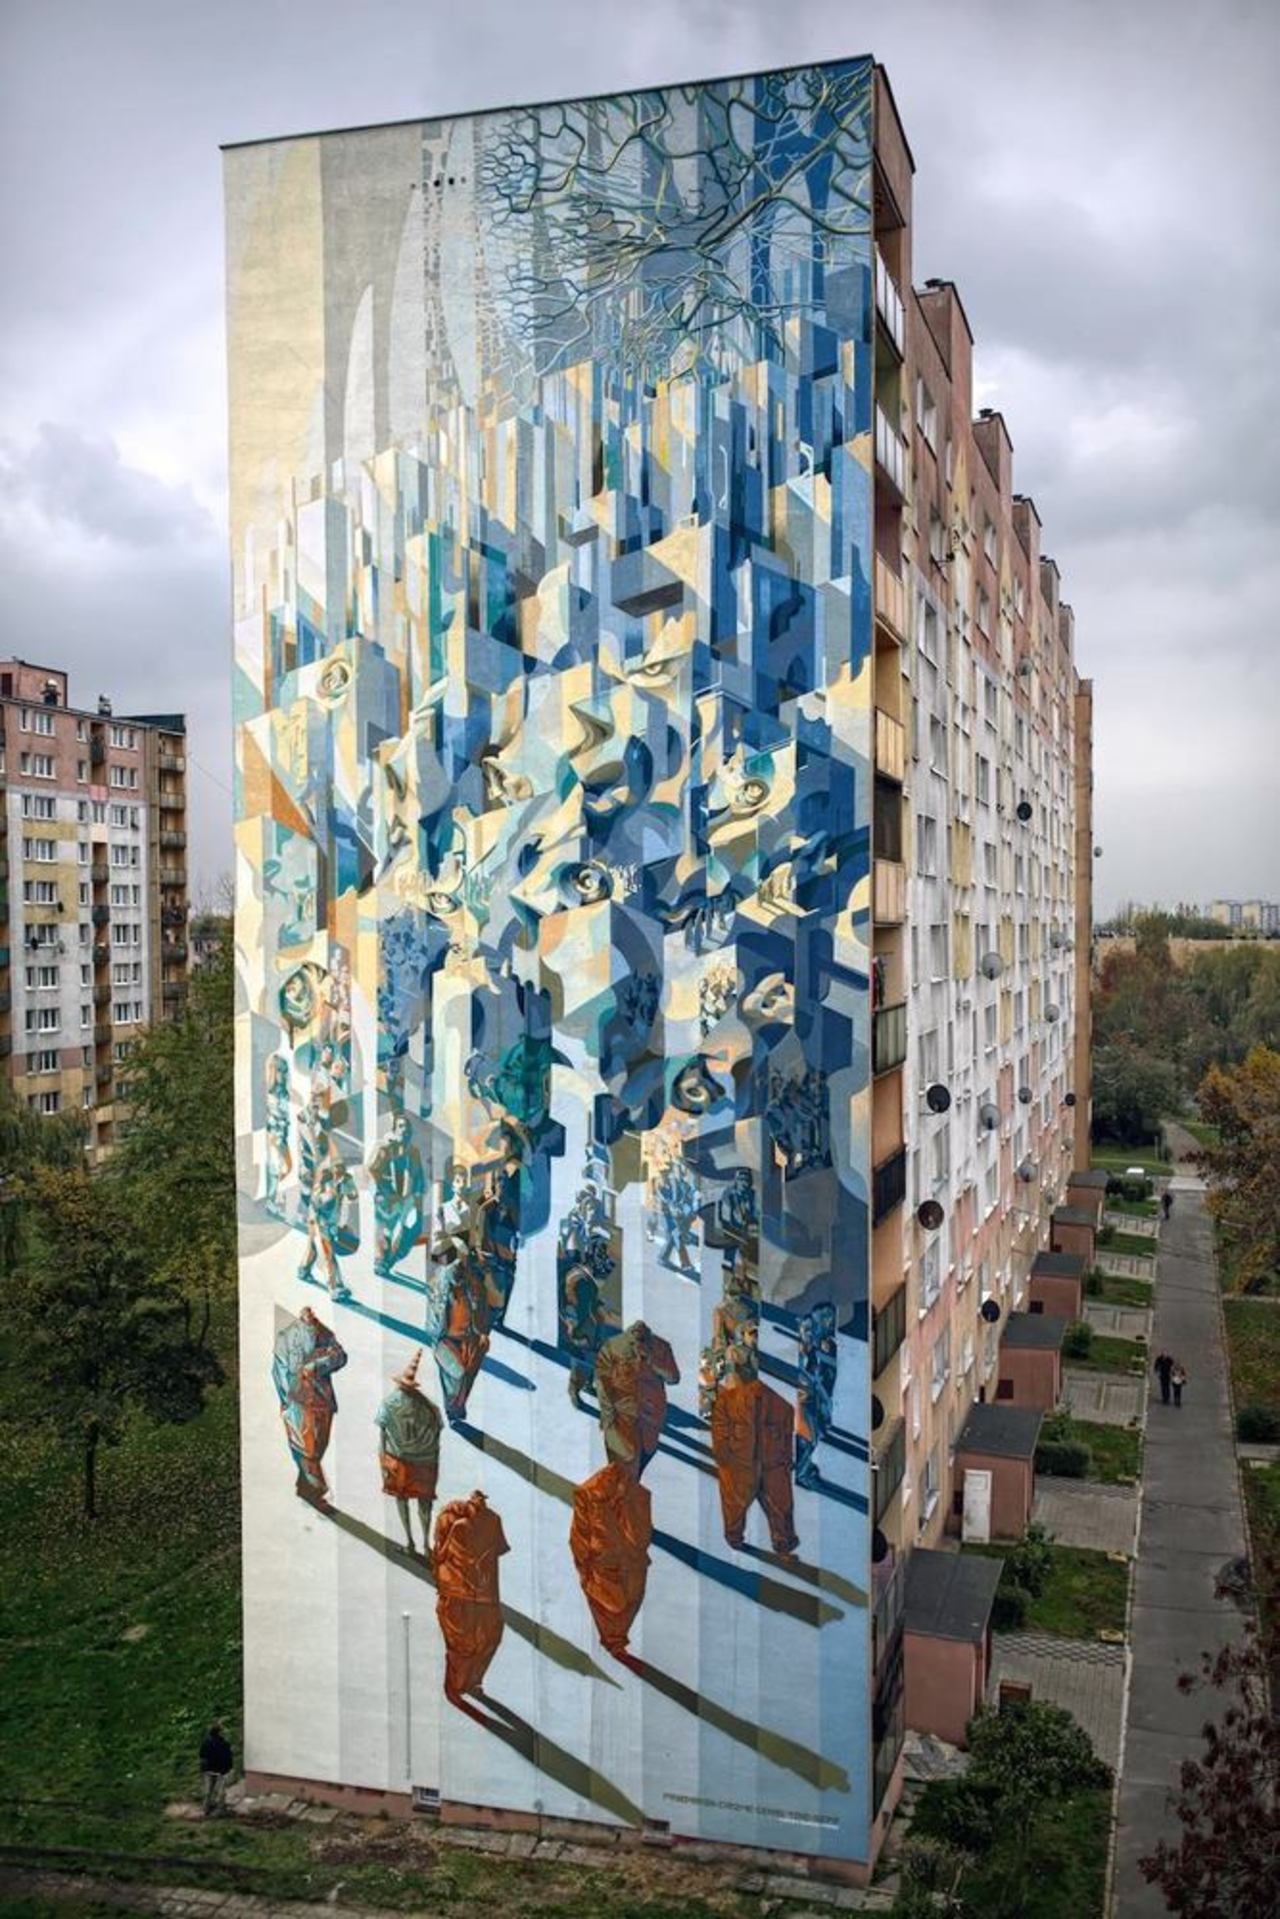 "Stunning work in Lodz, #Poland Have a look: http://buff.ly/1xiZsGS #streetart https://t.co/Dmuz0U6Tfn"